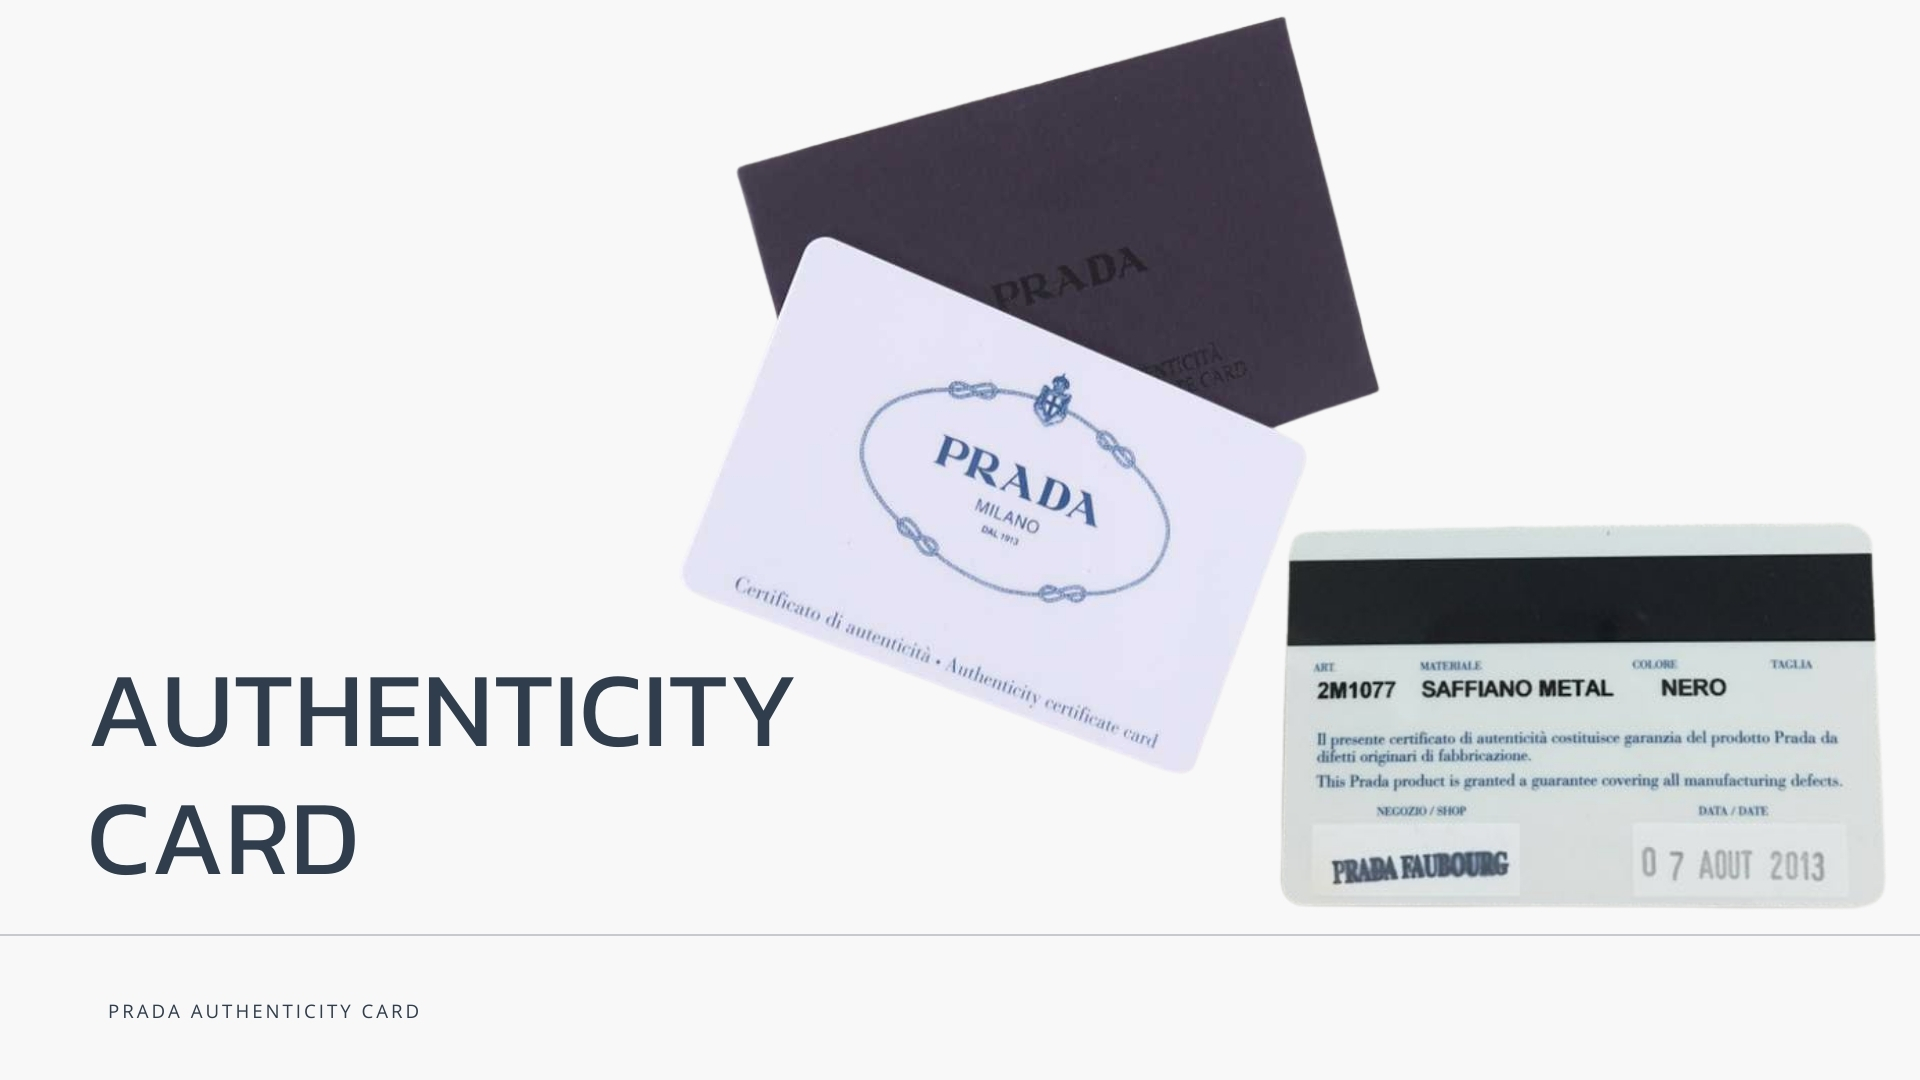 prada authenticity card